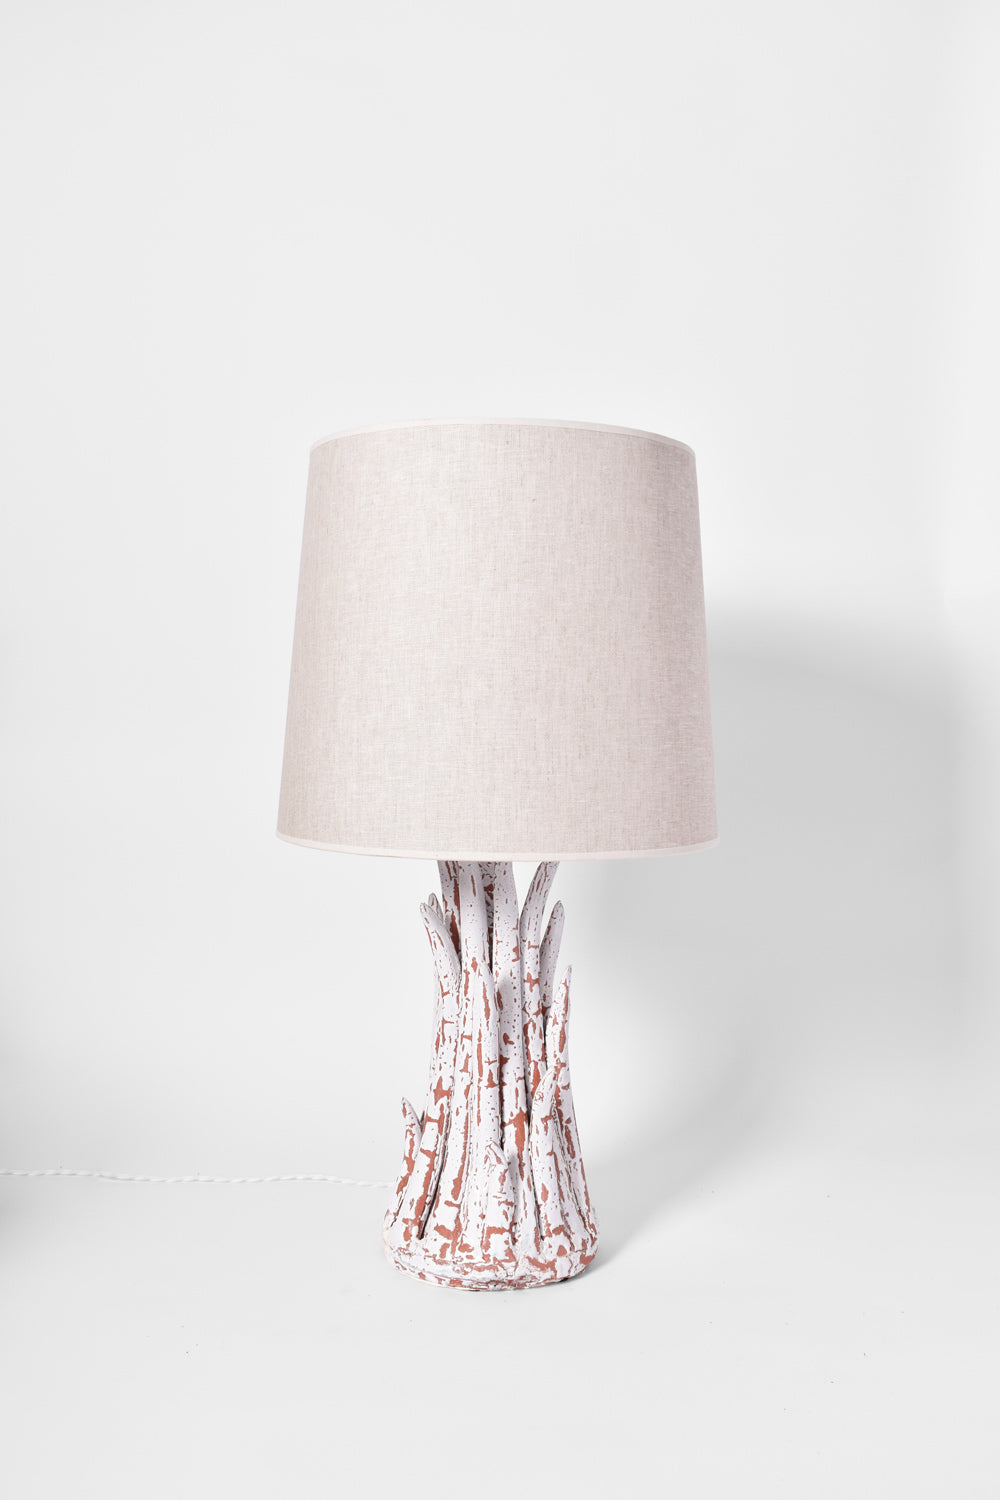 "Pico" white ceramic lamp, Barracuda edition.